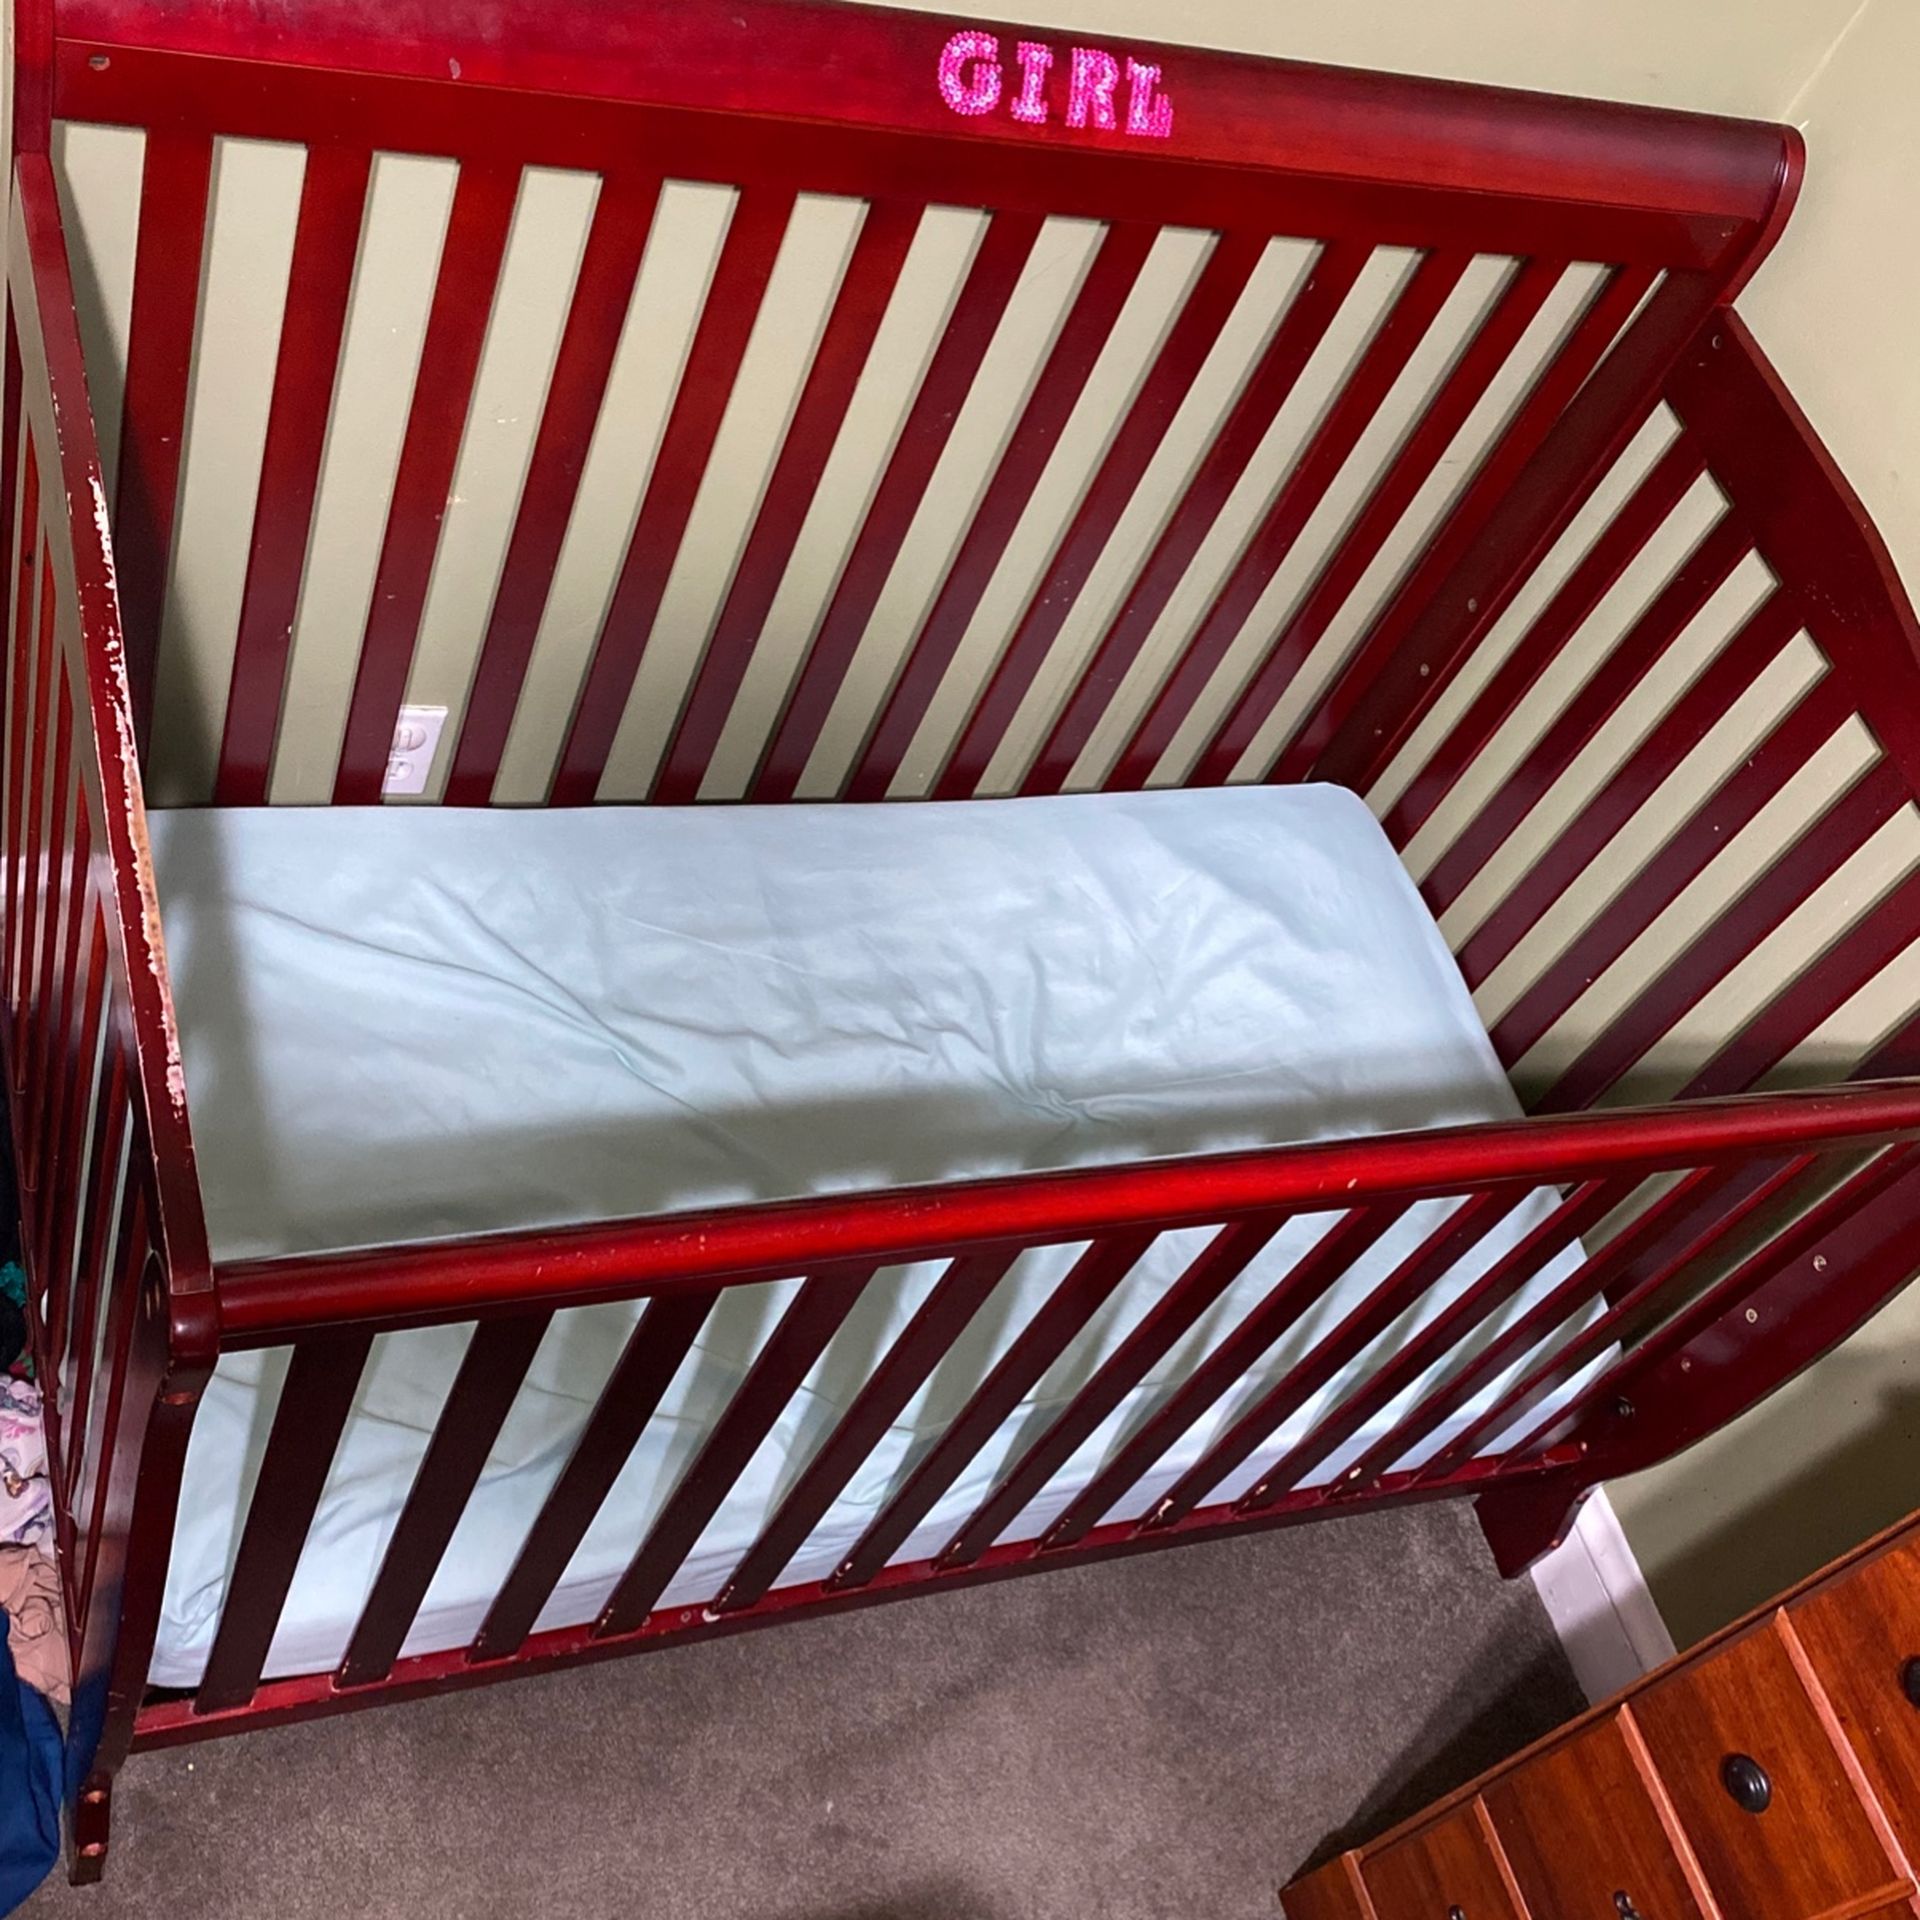 Baby crib & mattress For $60